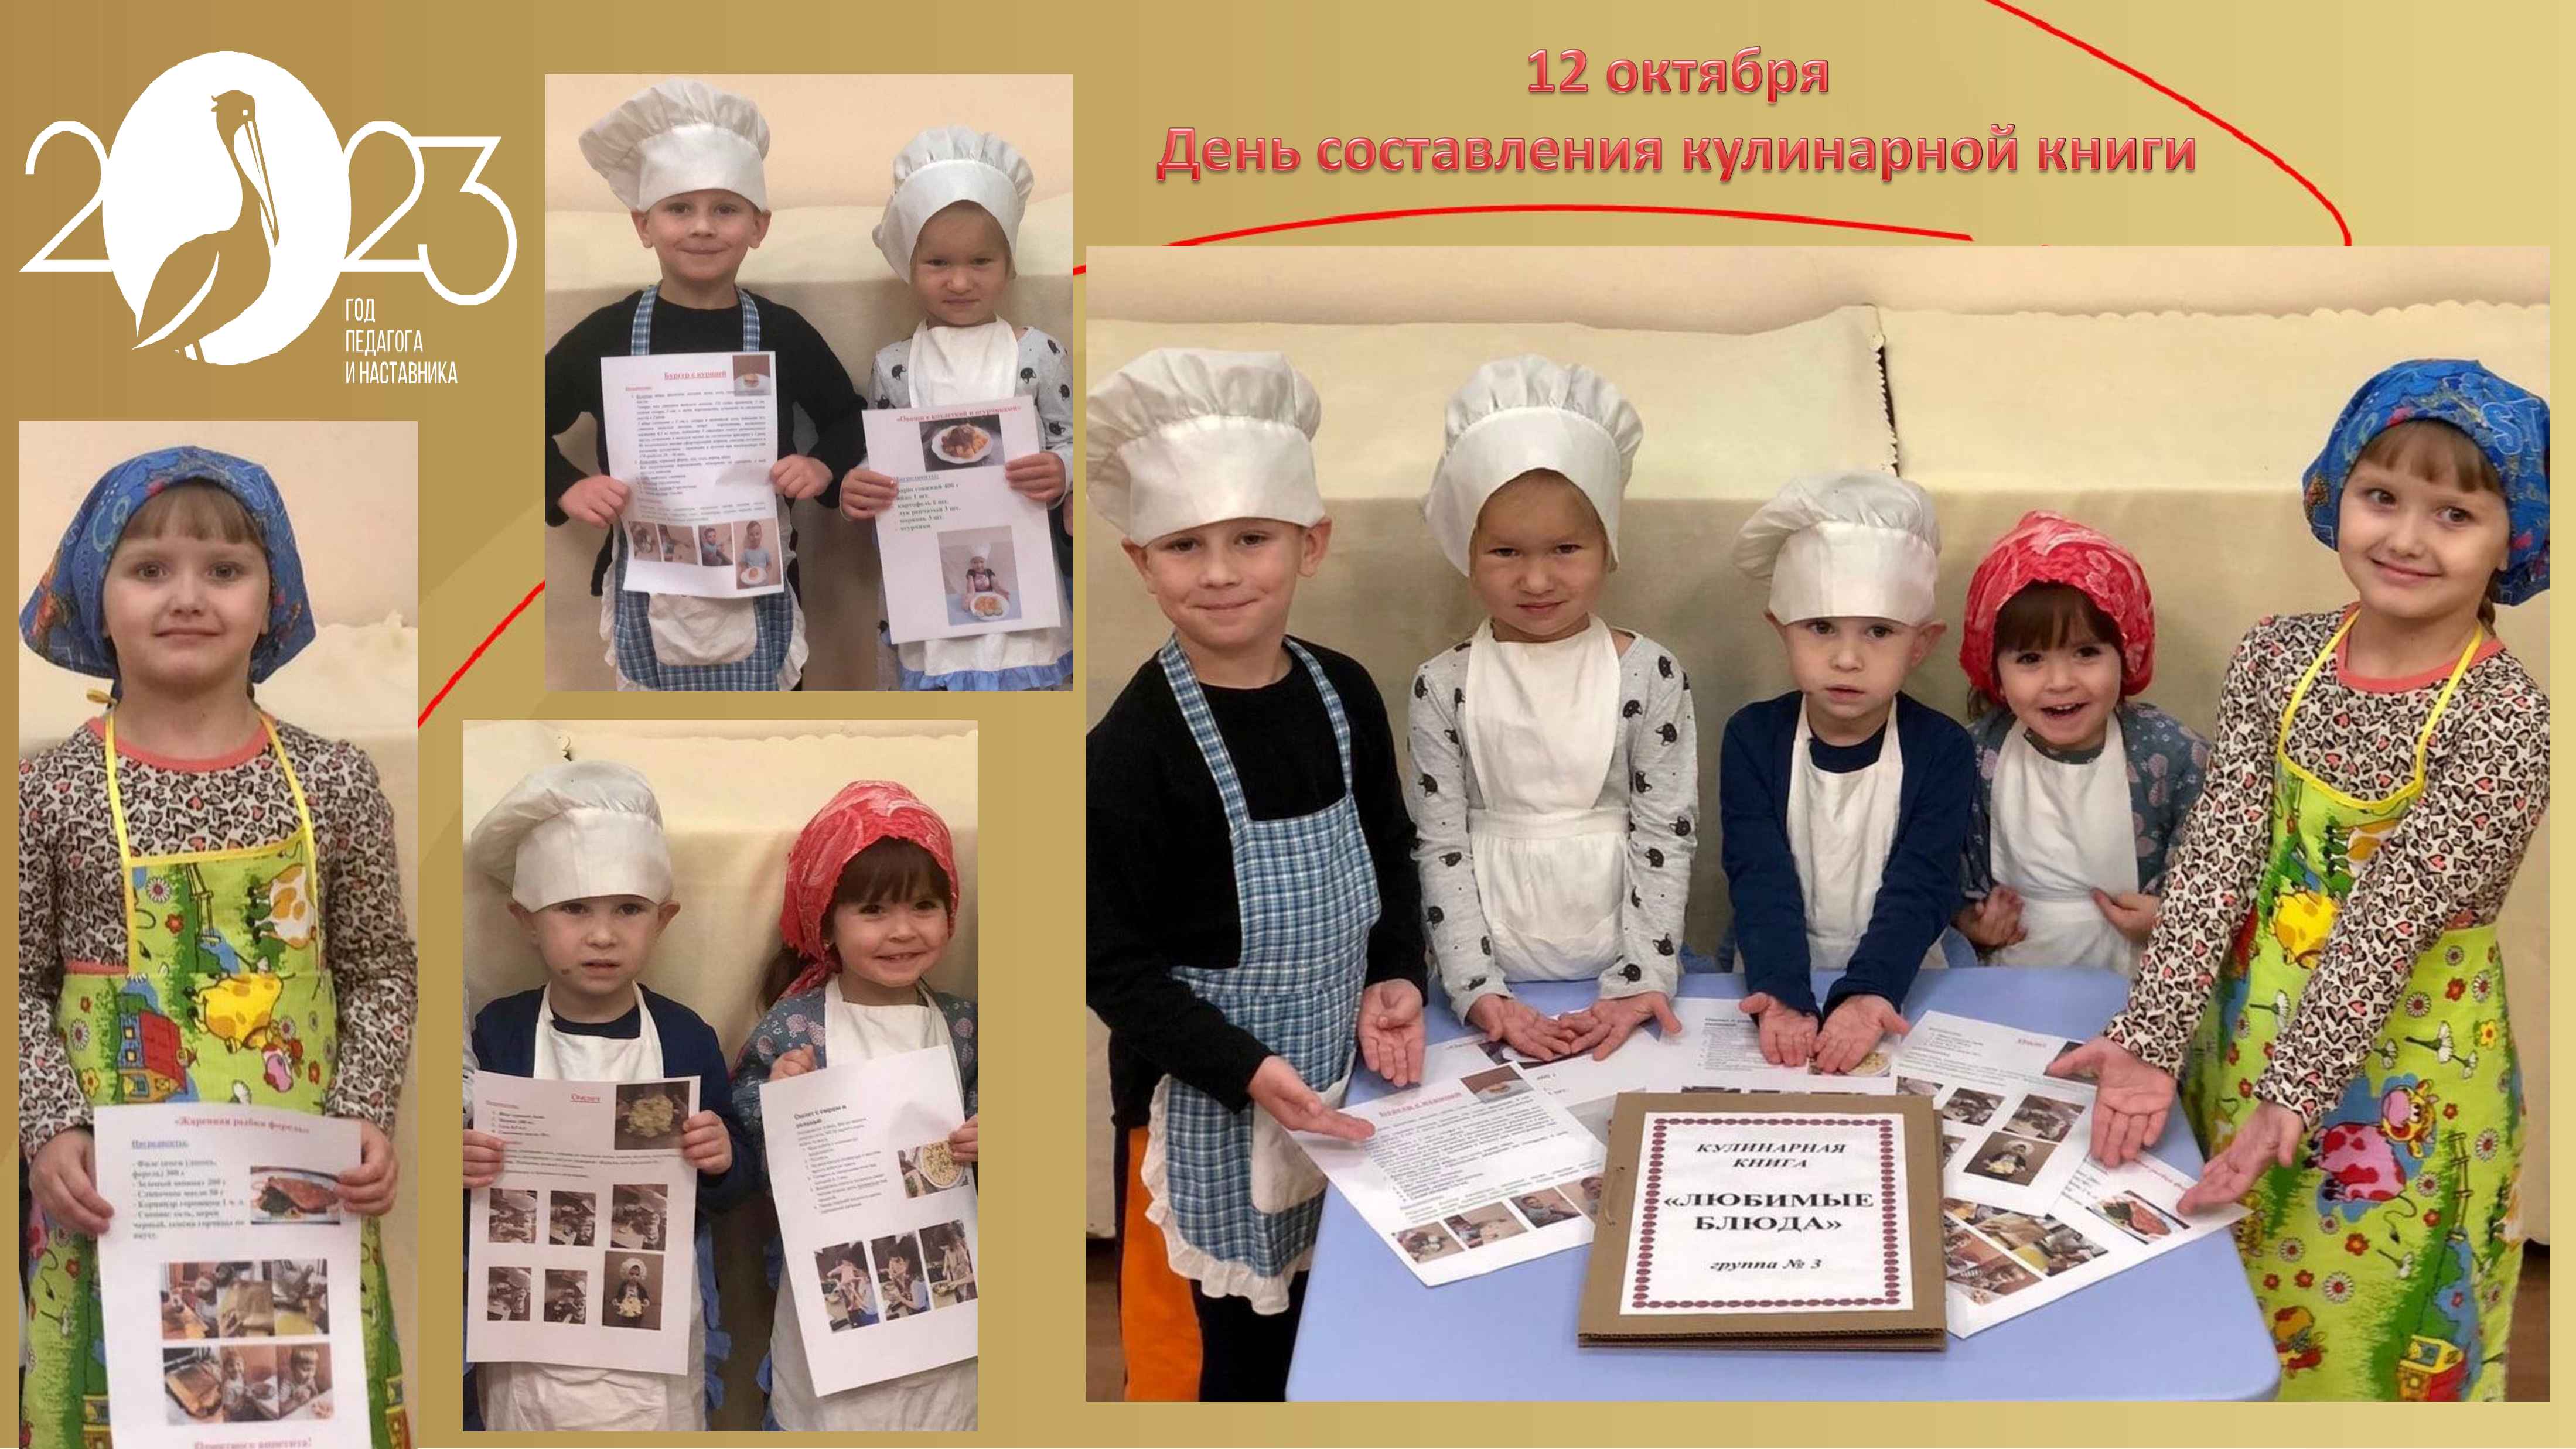 10 кулинарная книга 1